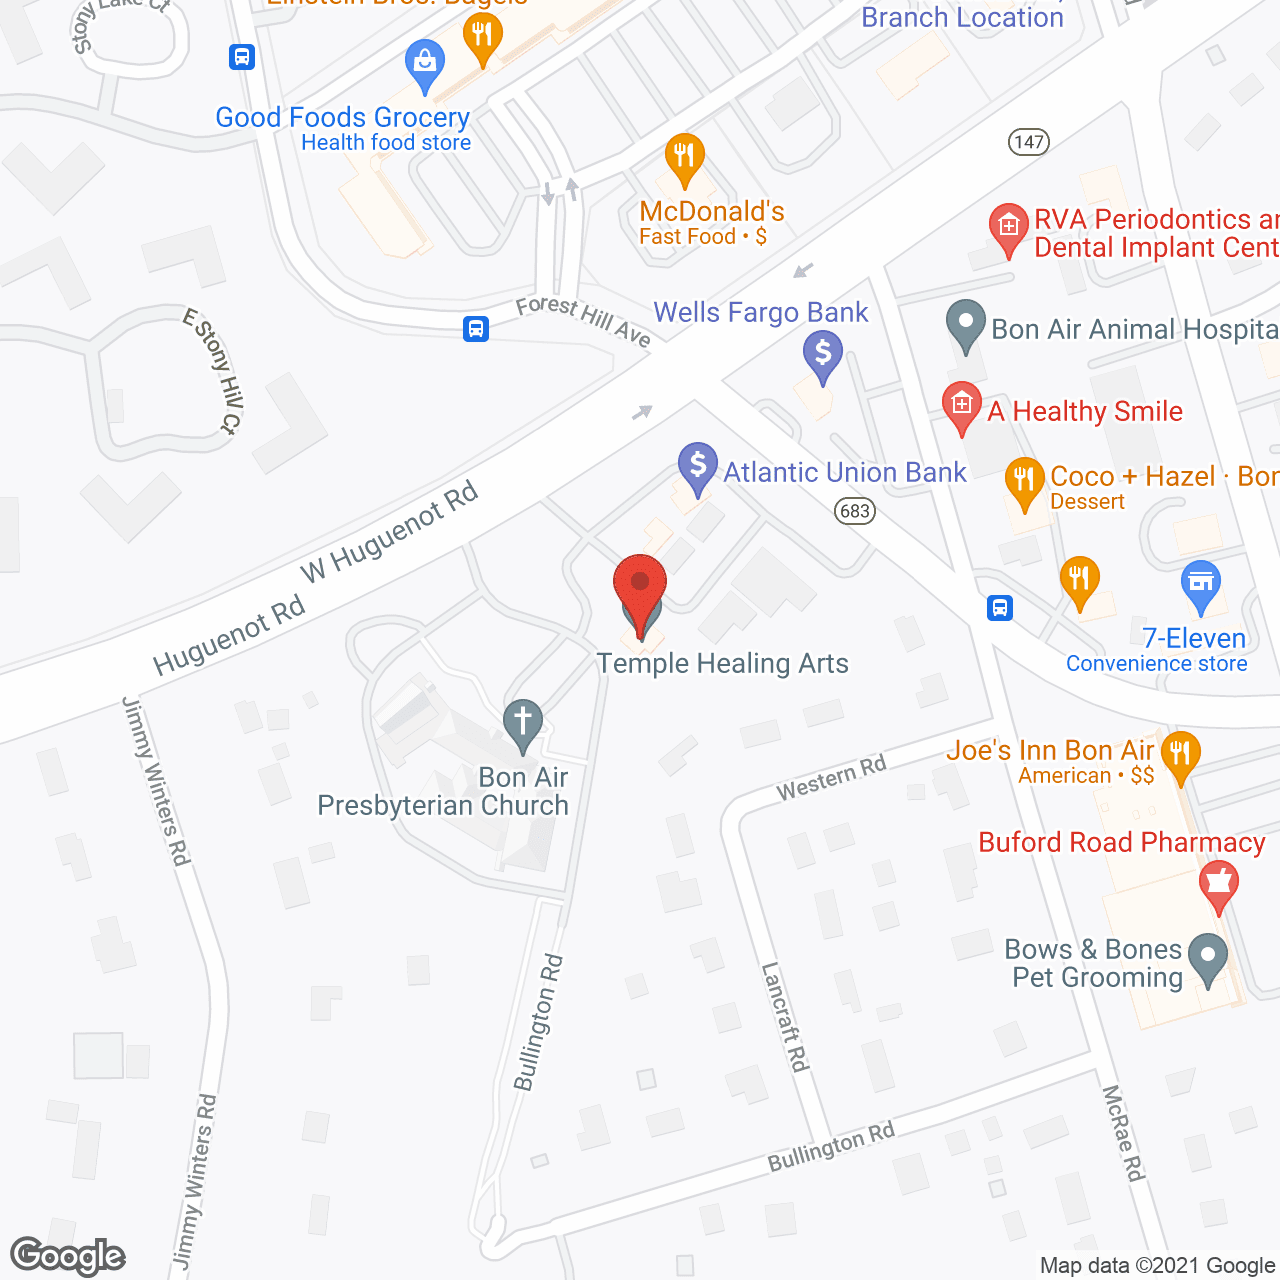 Comfort Homes in google map